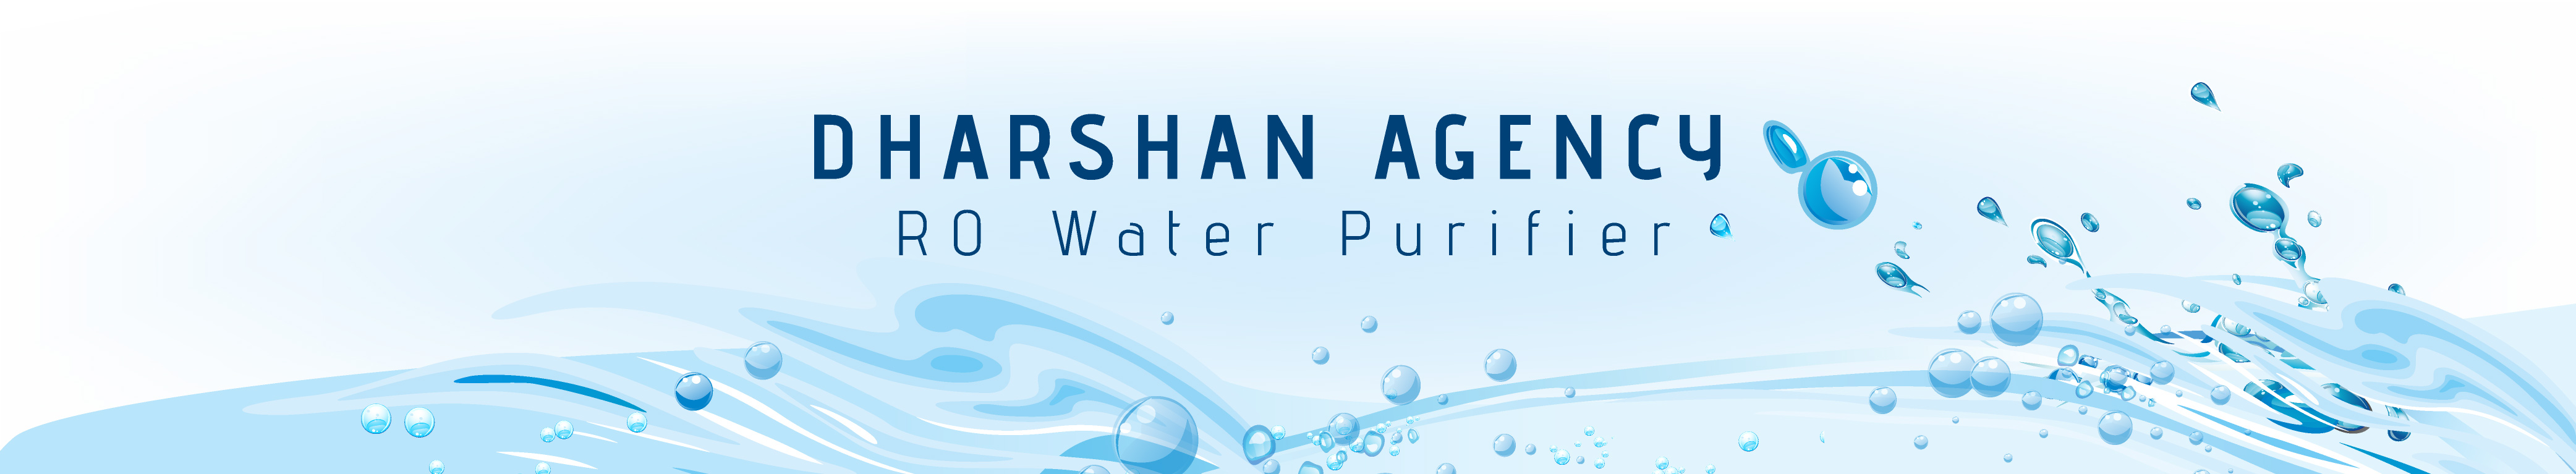 Dharshan Agency RO Water Purifier Banner Image